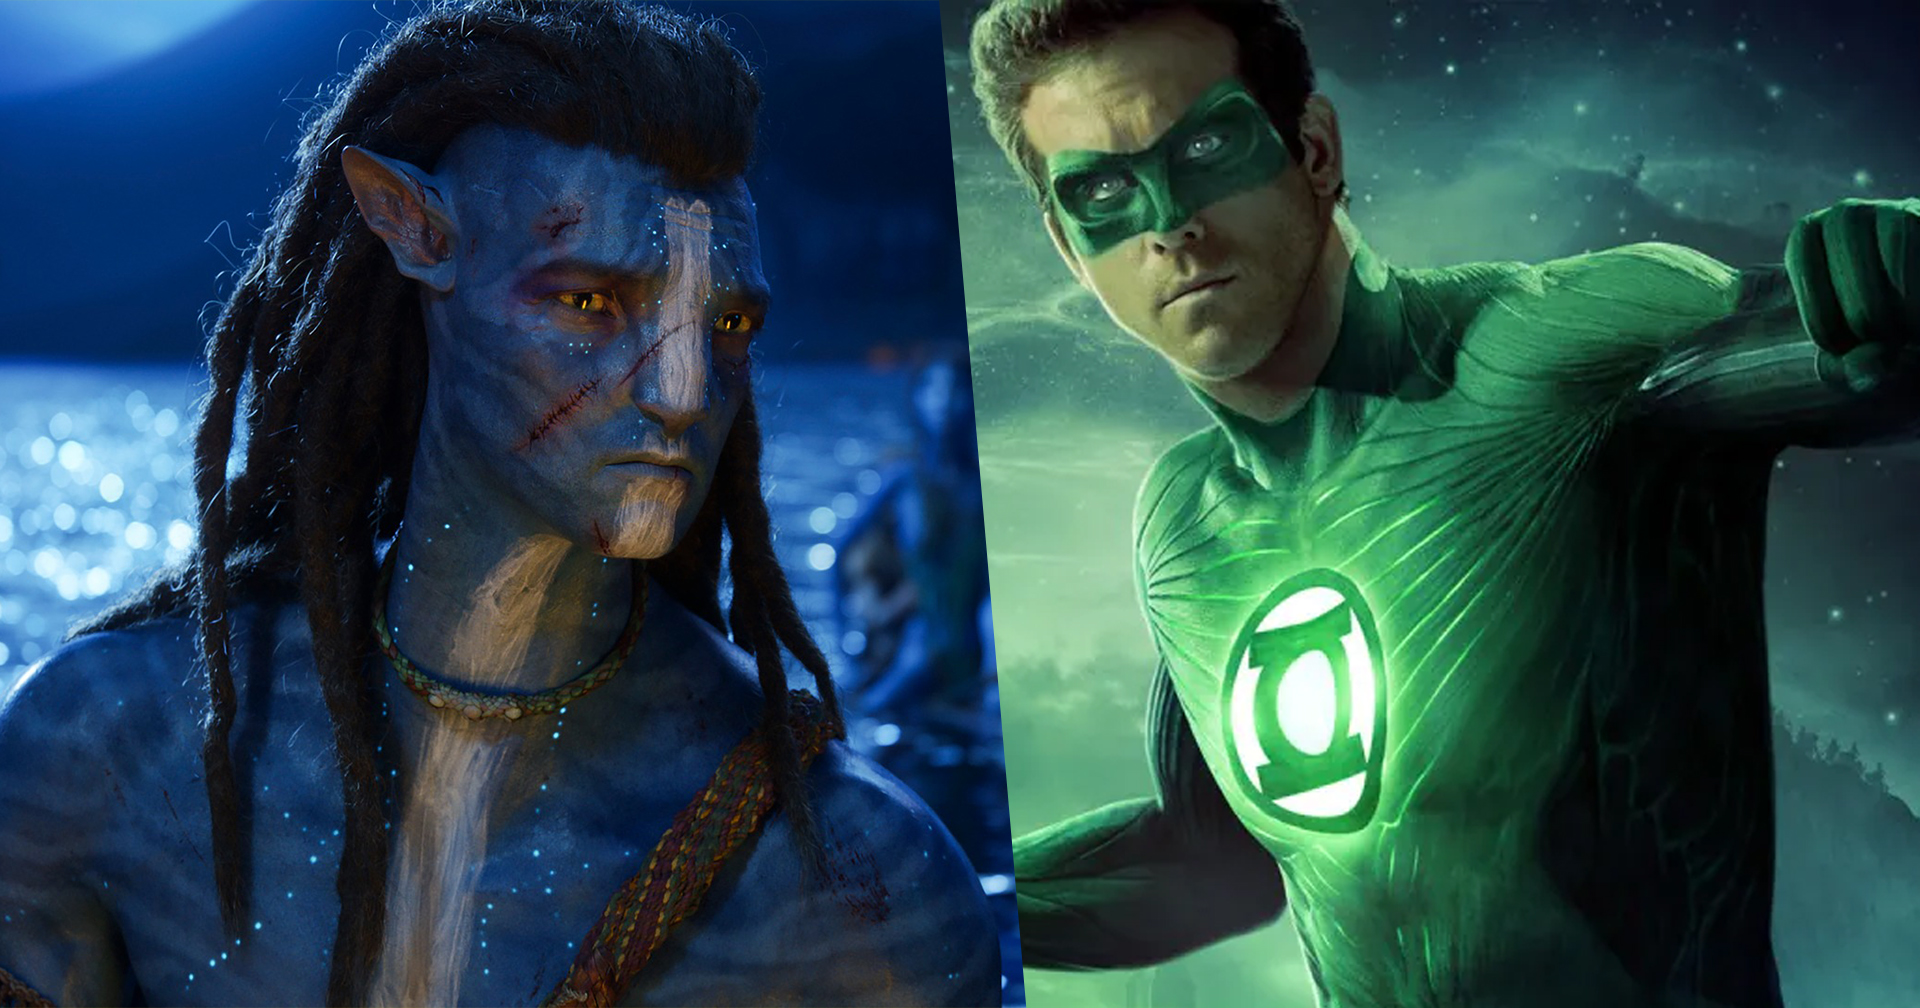 Sam Worthington ชวดบท Green Lantern เพราะดันวิจารณ์บทหนังว่า “ไม่สมเหตุสมผล”